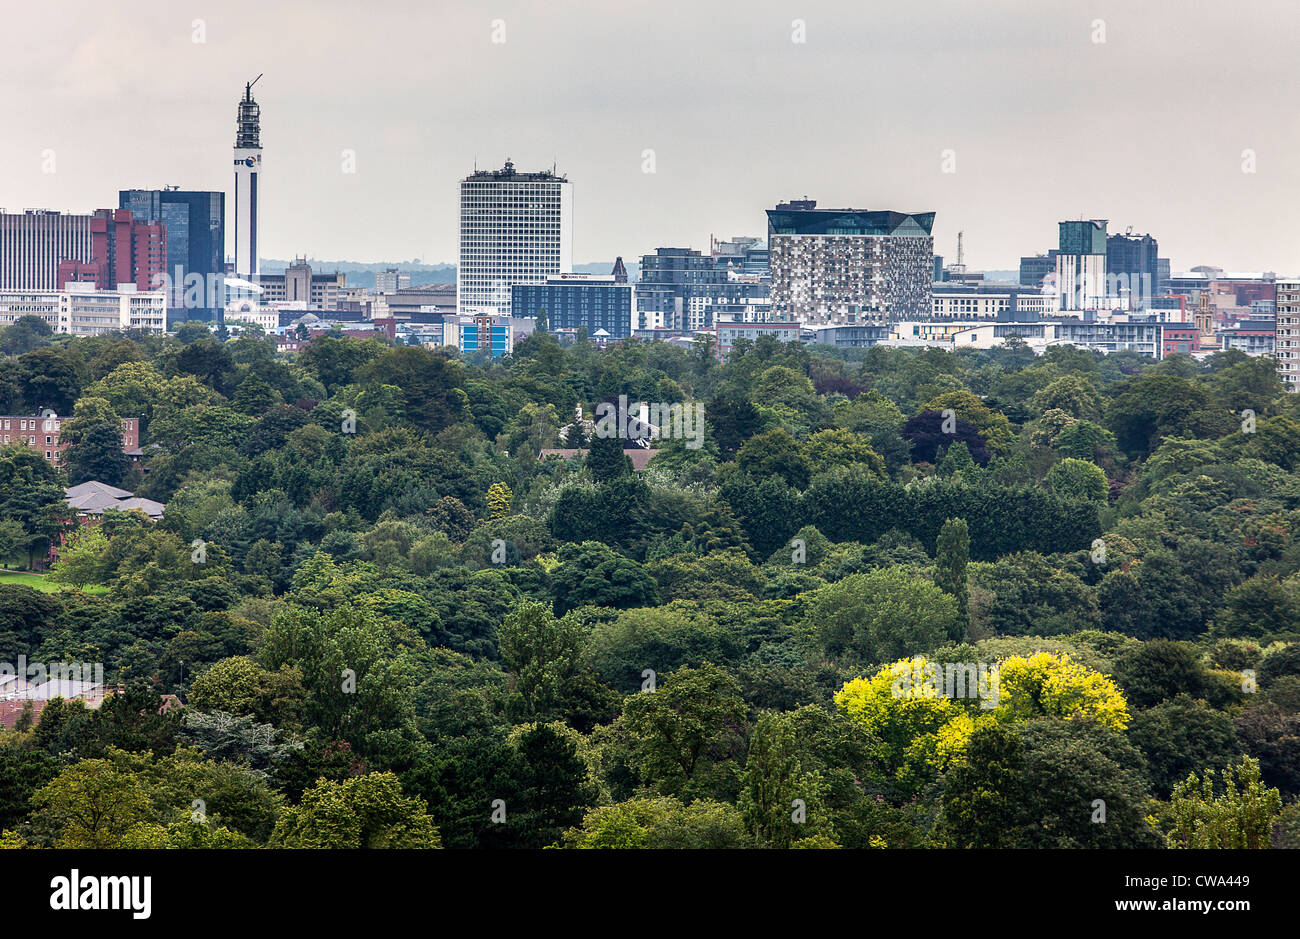 A view of the Birmingham city centre skyline, West Midlands, UK. Stock Photo